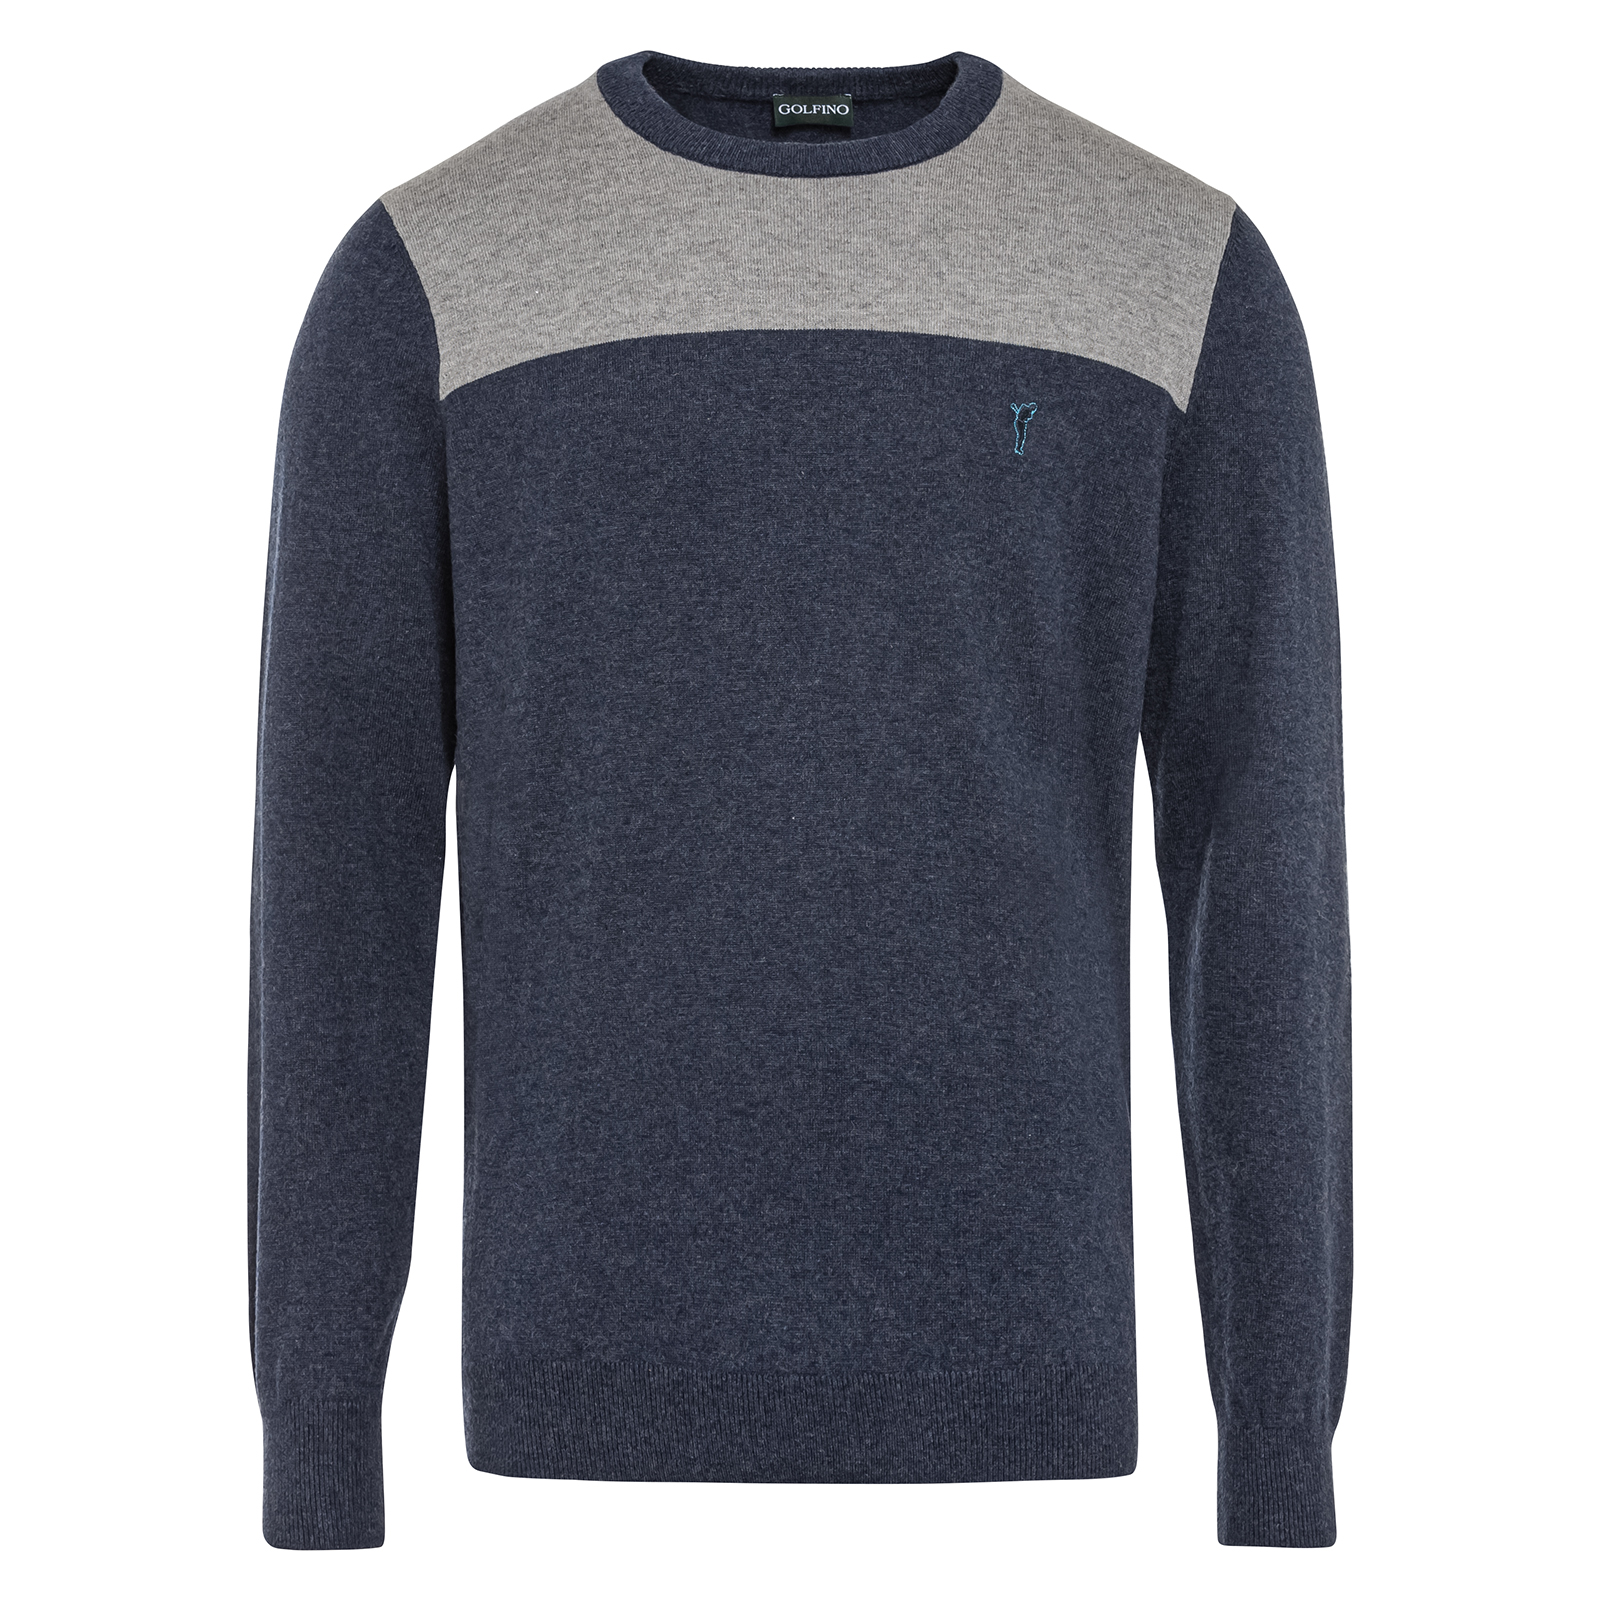 Men's timeless golf sweater with merino wool